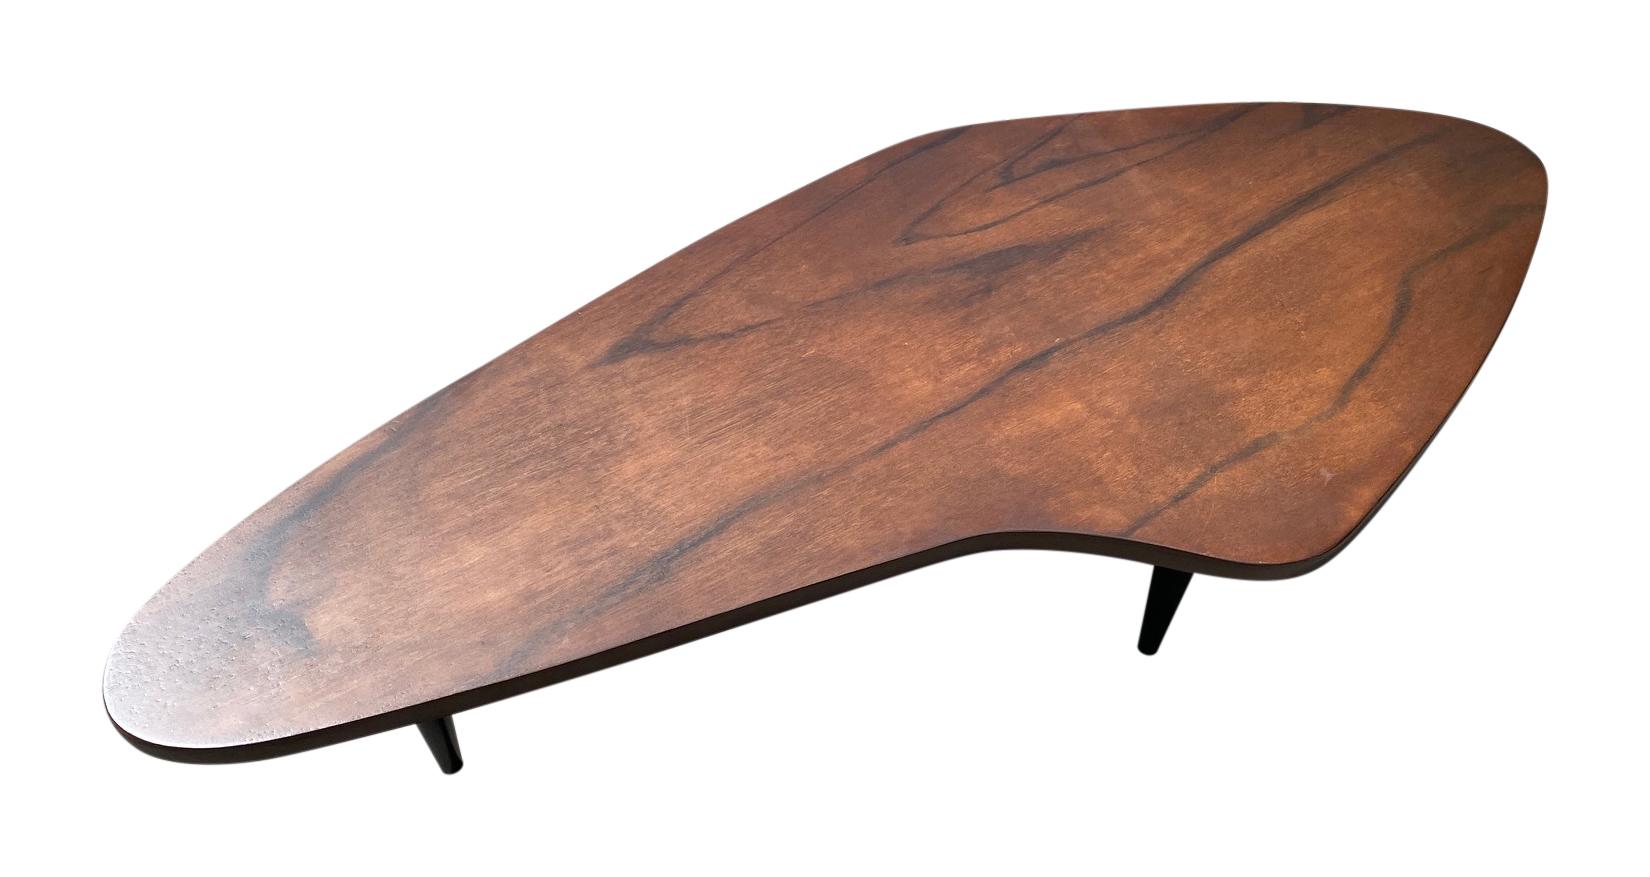 Mexican asymmetrical organic freeform coffee table Mid-Century Modern.